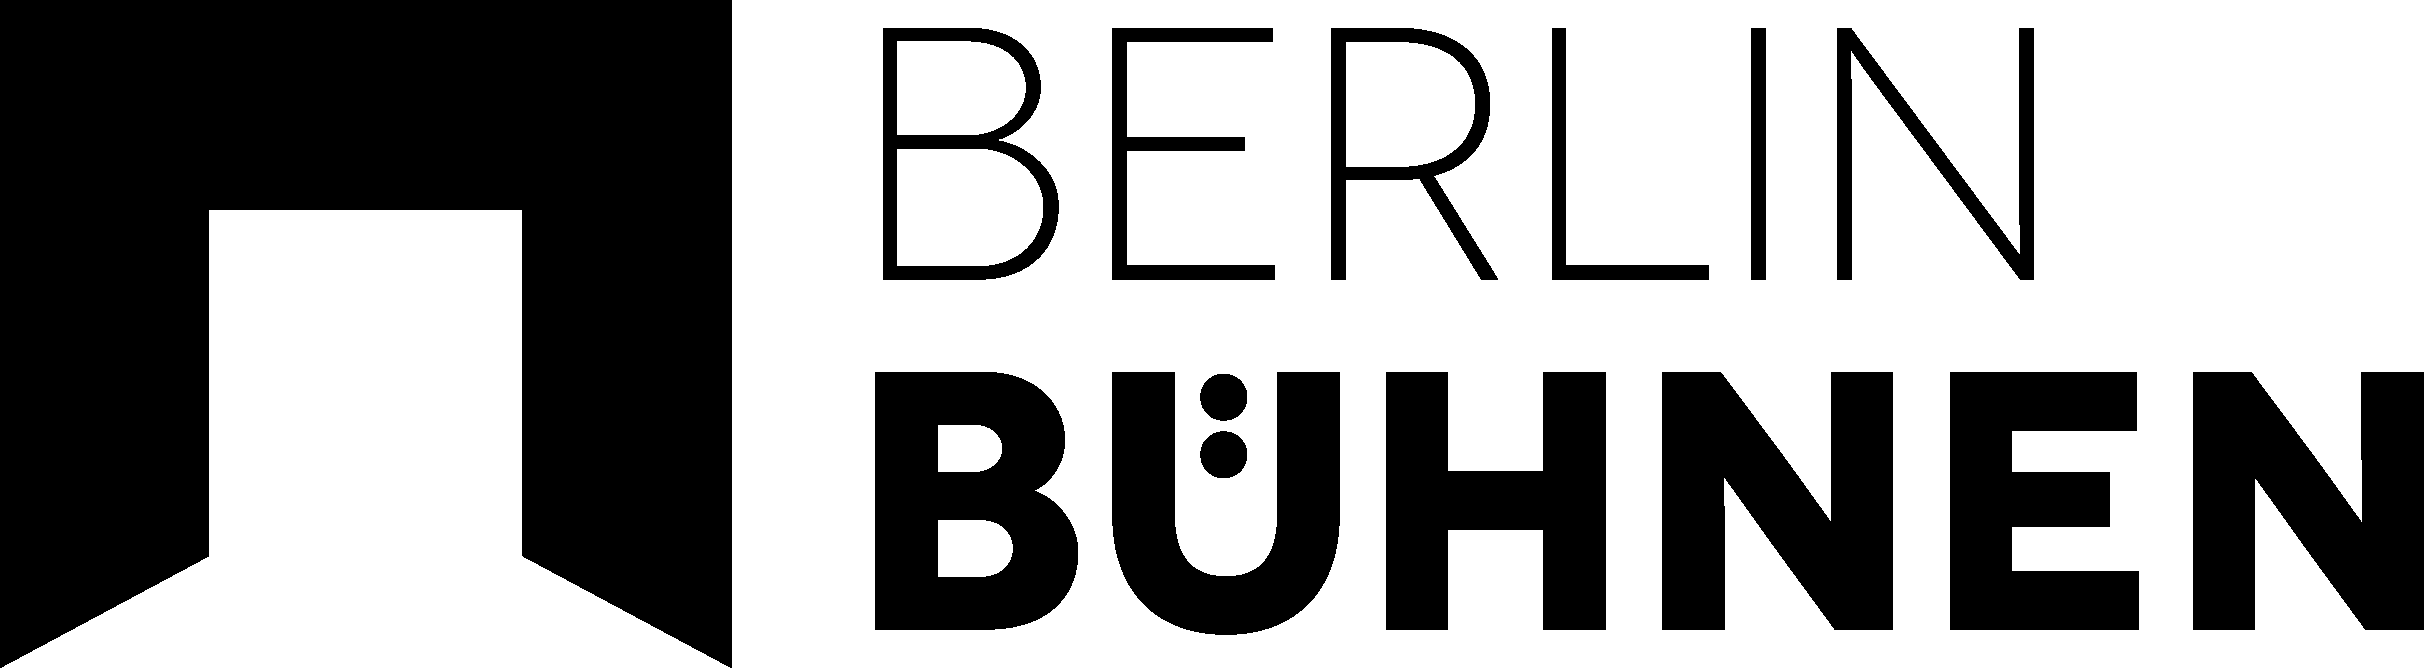 Logo Berlin Bühnen